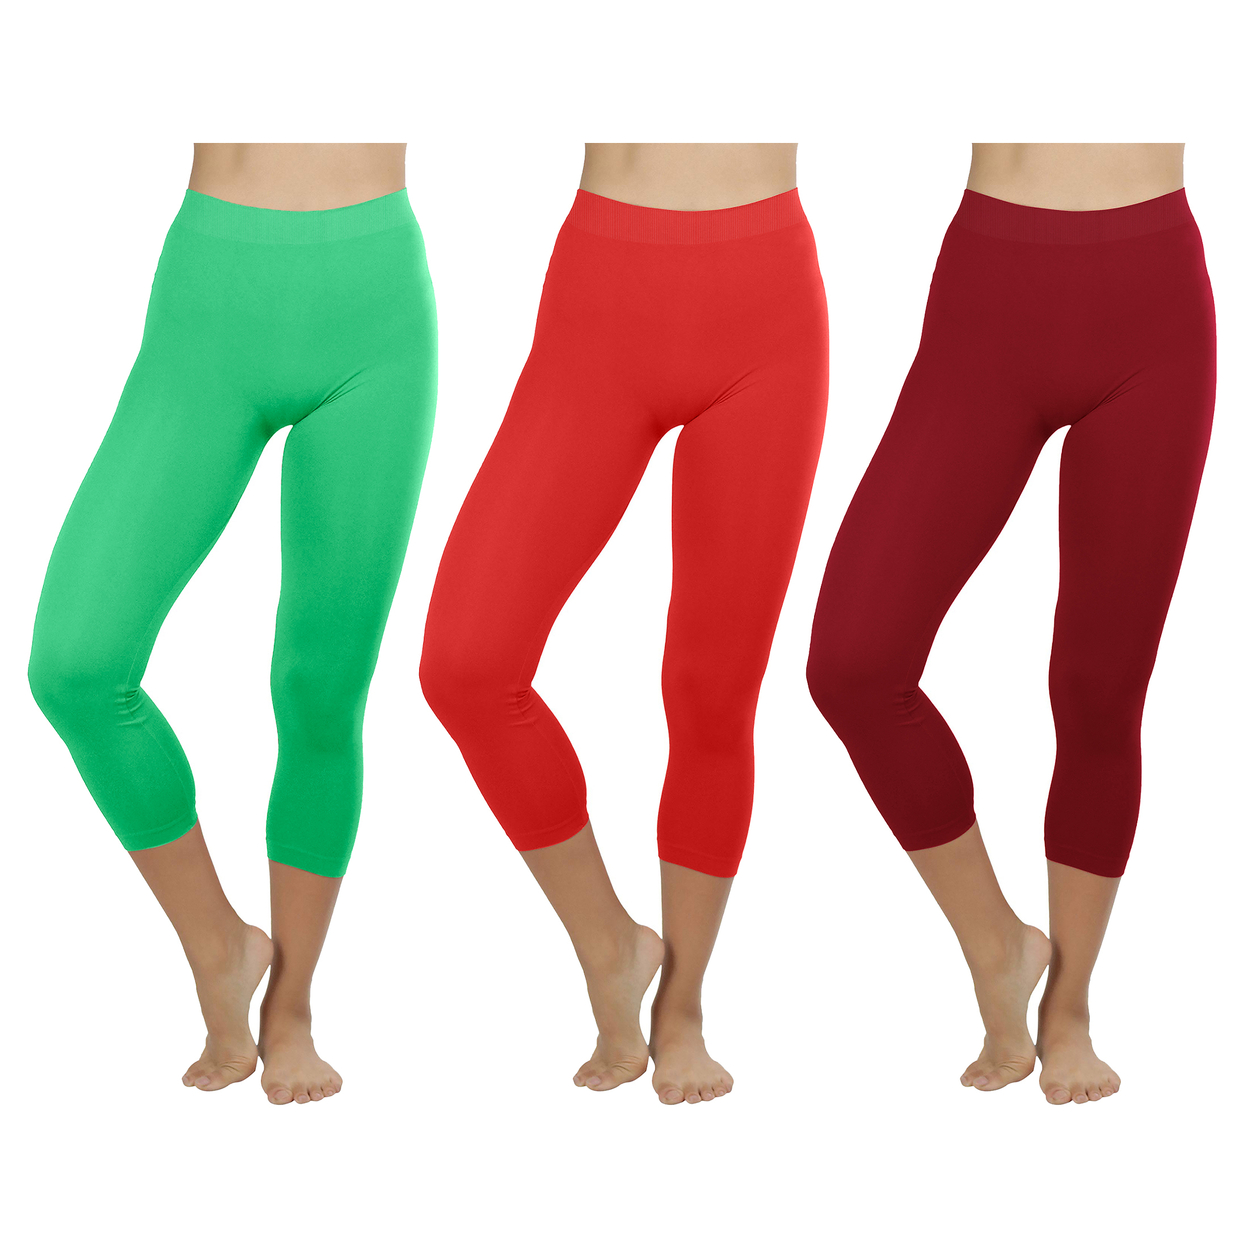 3-Pack: Women's Ultra-Soft High Waisted Smooth Stretch Active Yoga Capri Leggings - Burgundy,burgundy,burgundy, Small